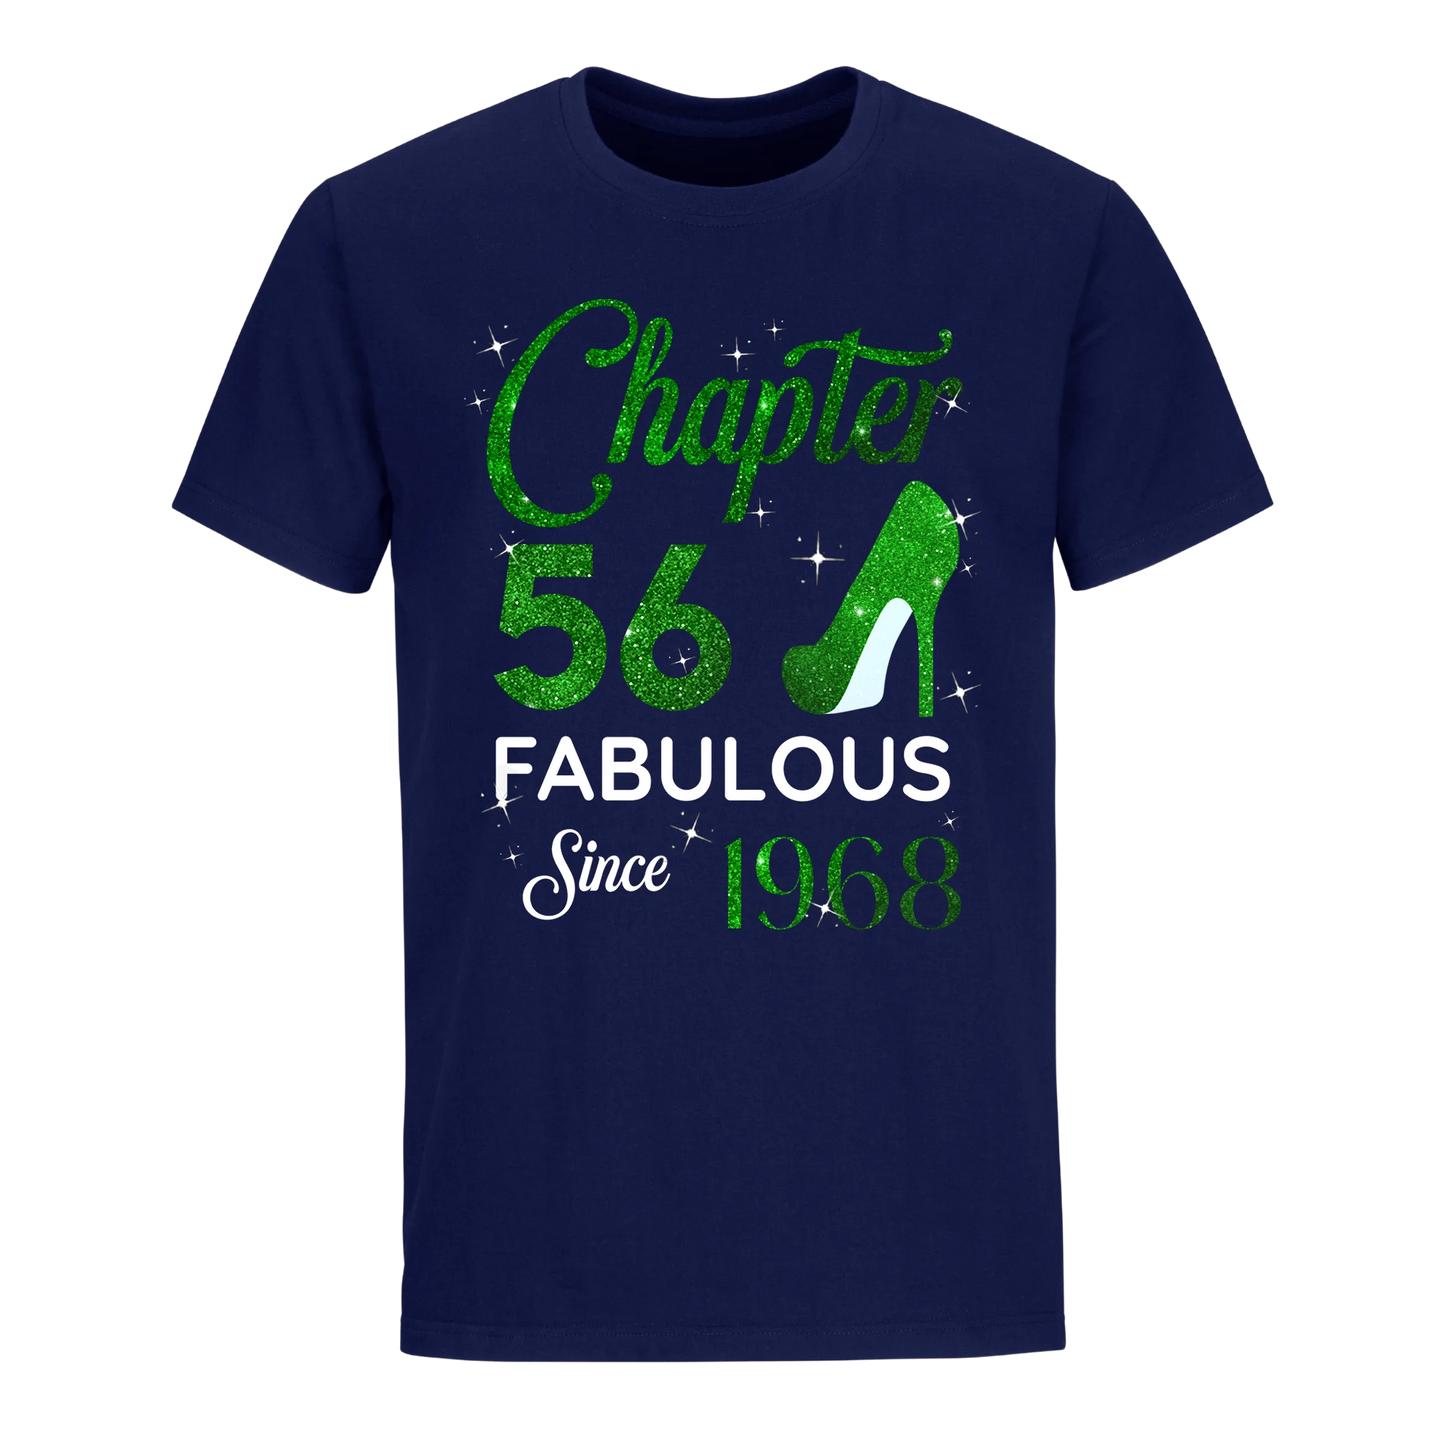 CHAPTER 56 FABULOUS SINCE 1968 UNISEX SHIRT GREEN